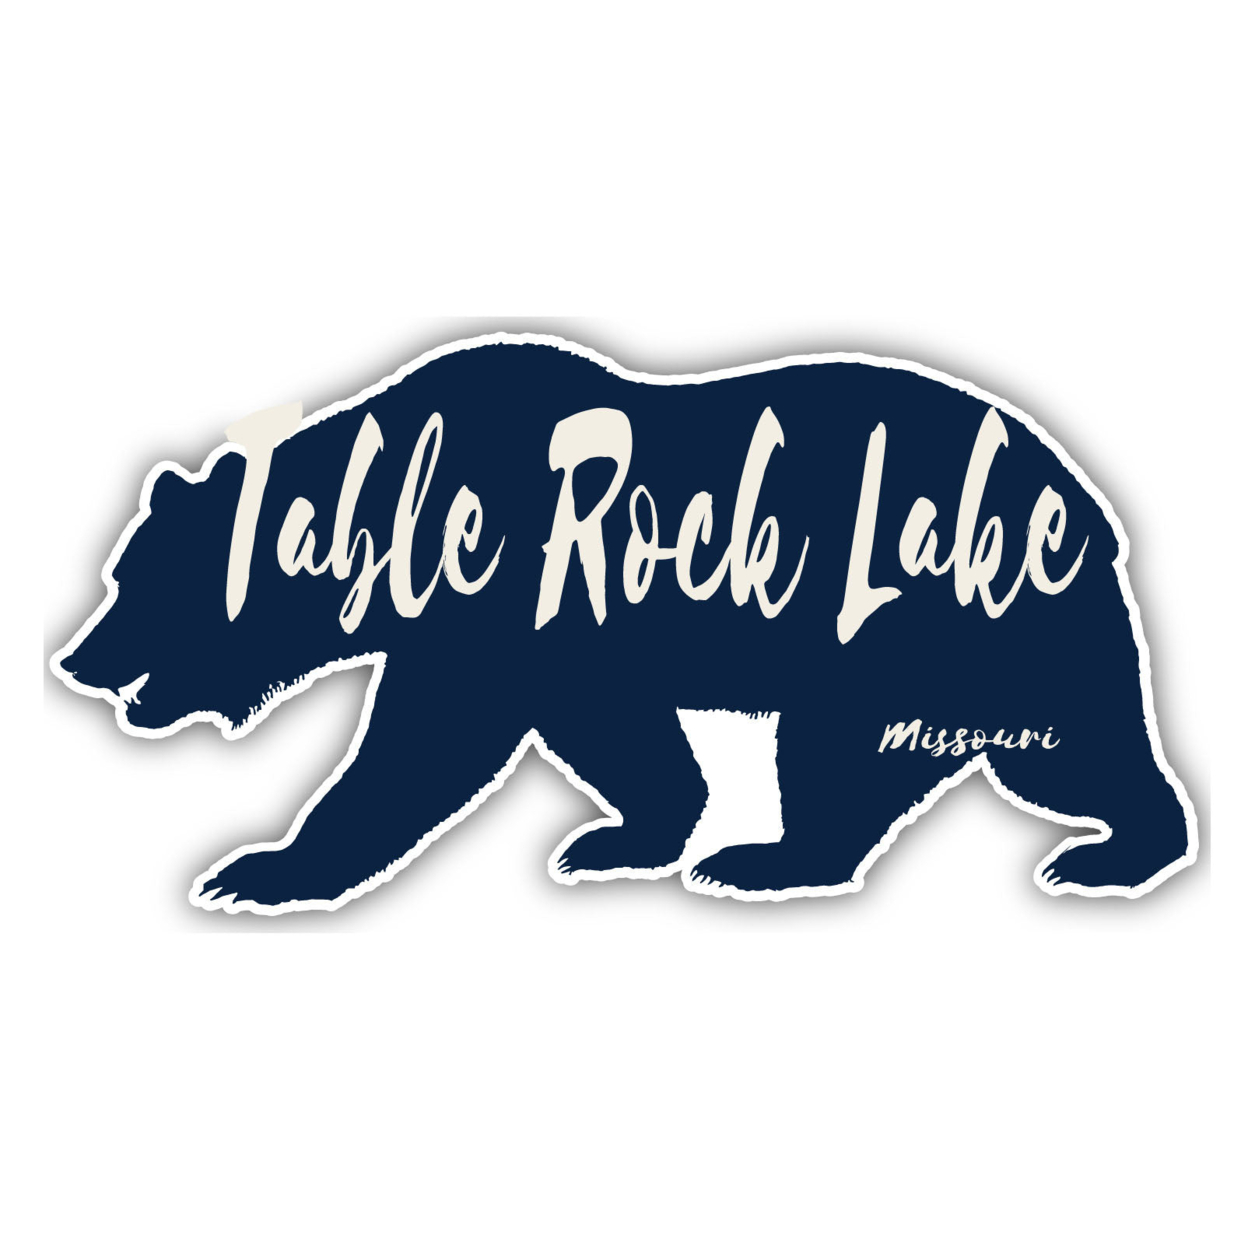 Table Rock Lake Missouri Souvenir Decorative Stickers (Choose Theme And Size) - Single Unit, 4-Inch, Bear